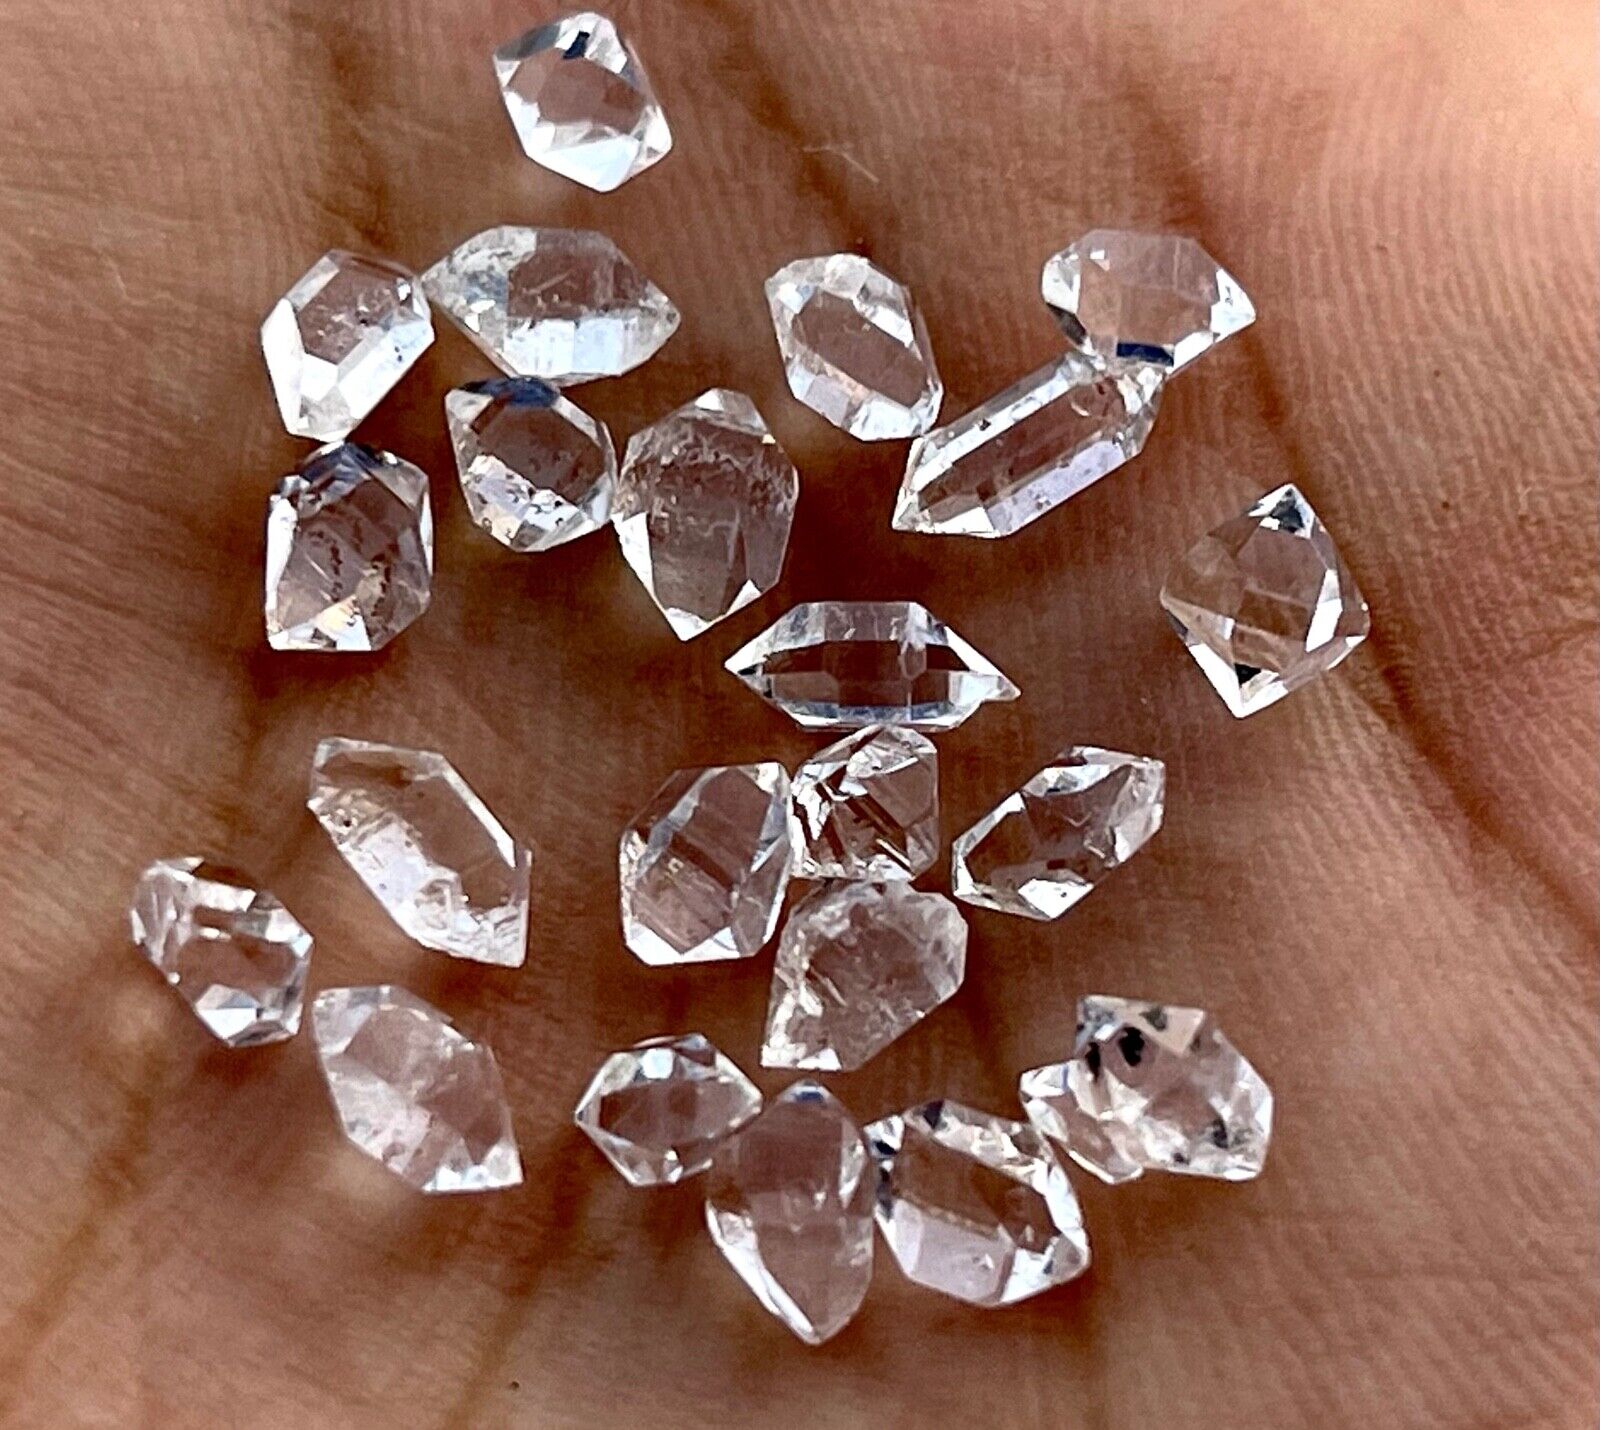 60 Pieces Natural Double Terminated herkimer diamond quartz Crystals @gems